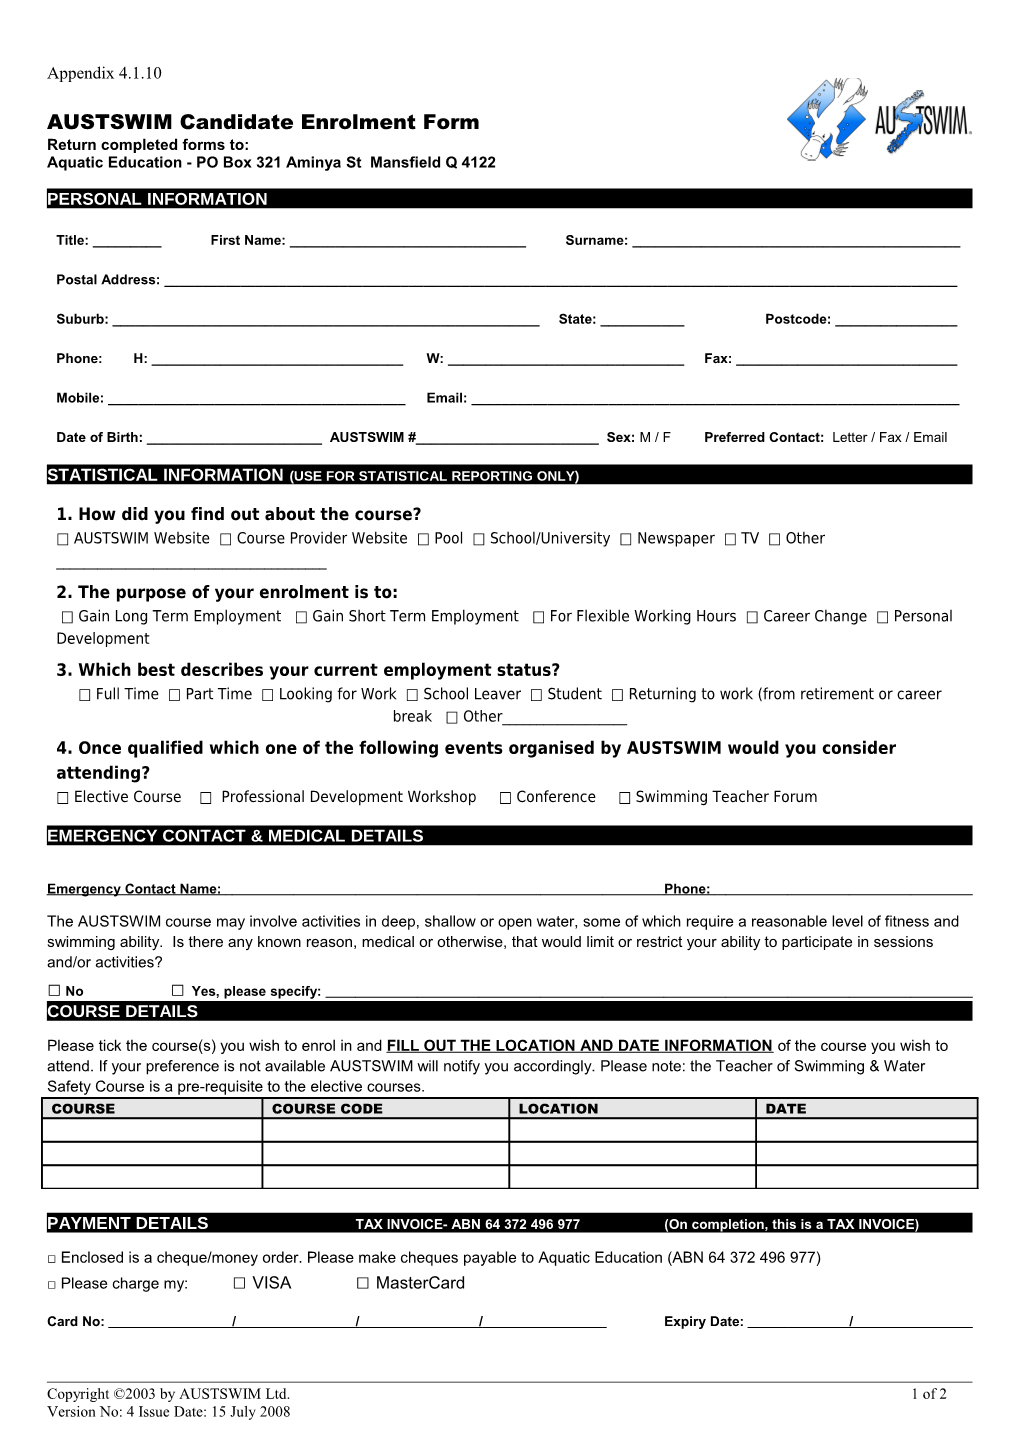 AUSTSWIM Candidate Enrolment Form